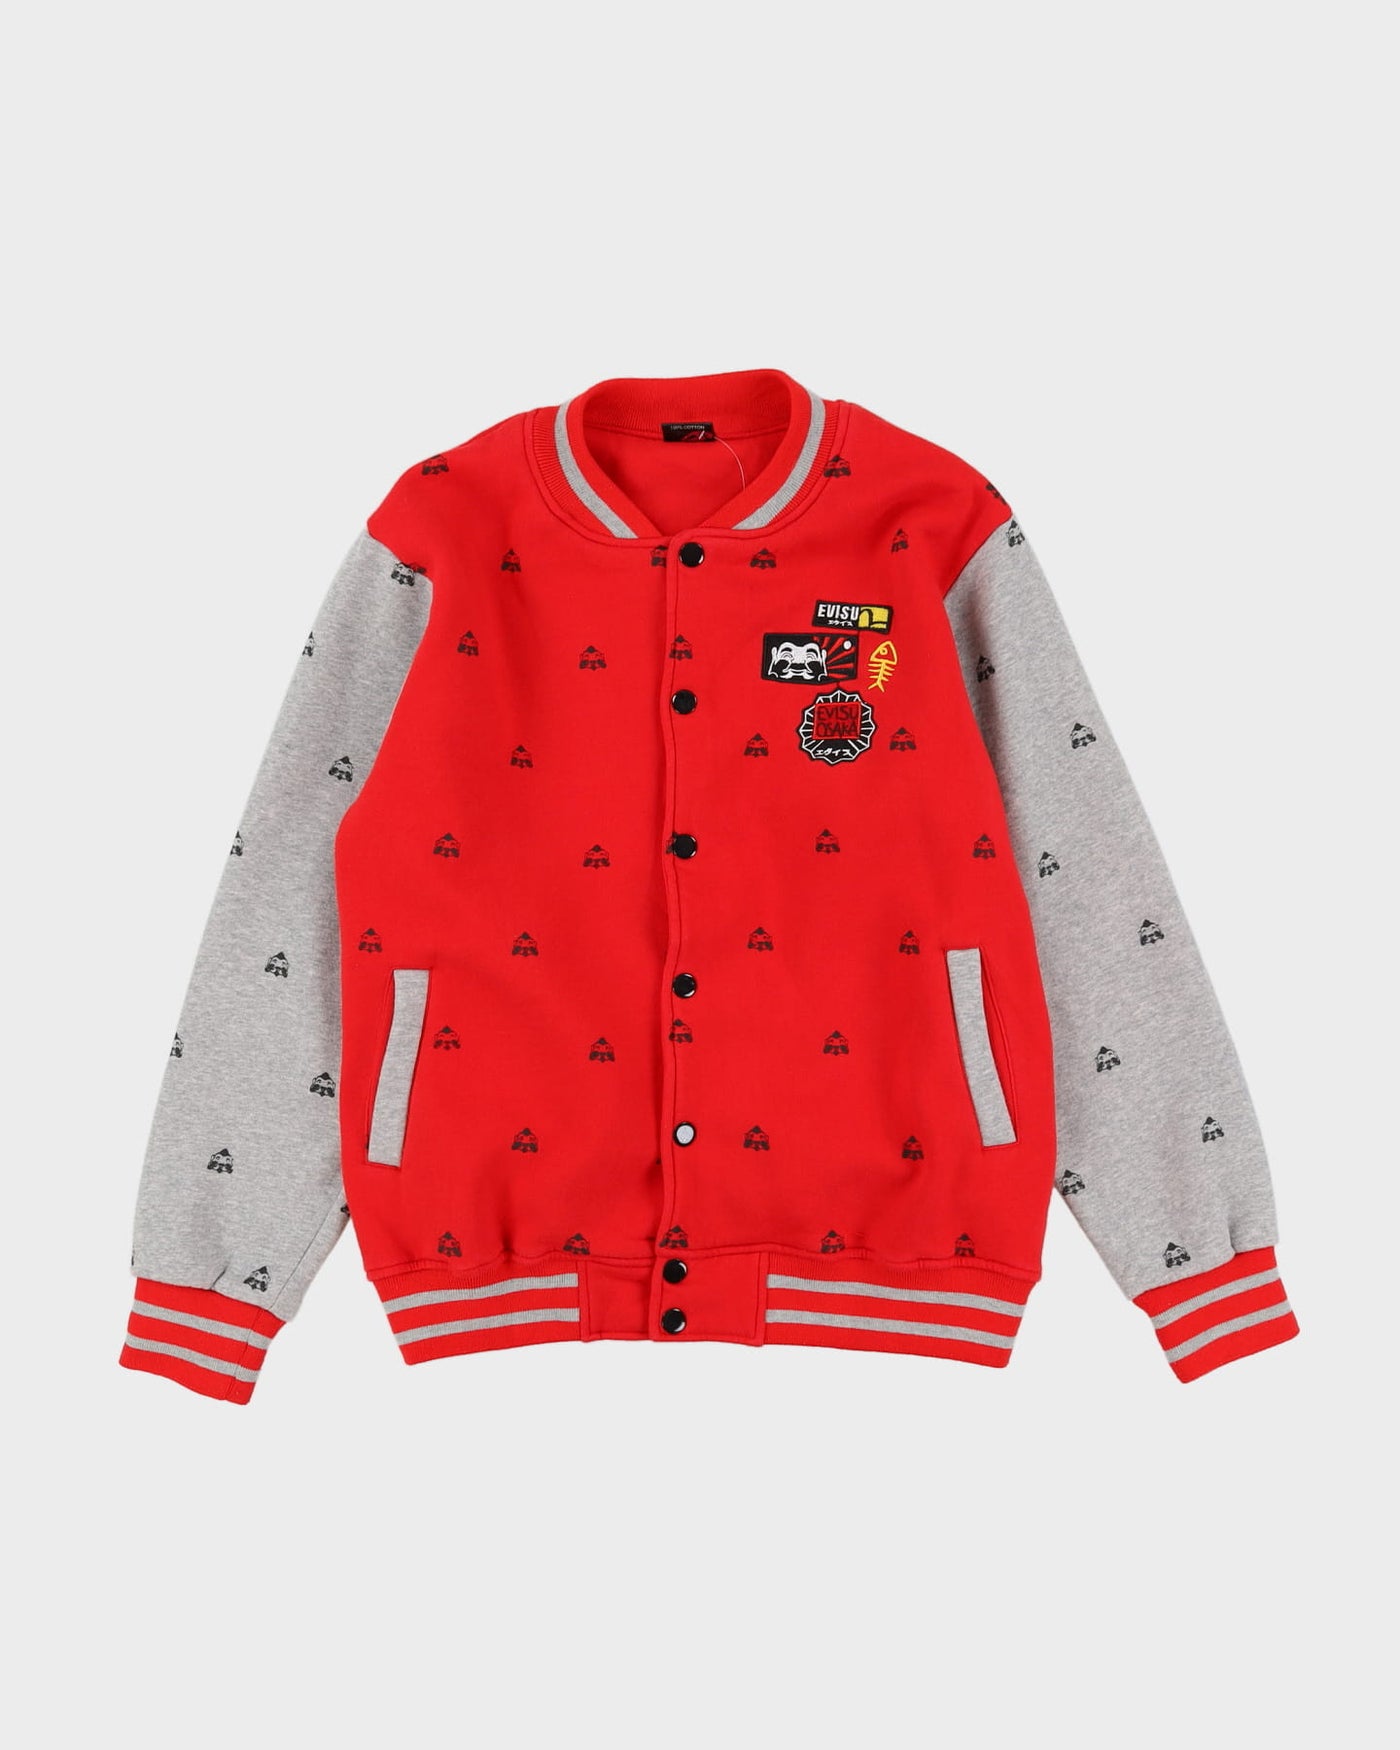 00s Evisu Red All Over Print Button Up Letterman Sweatshirt - XL